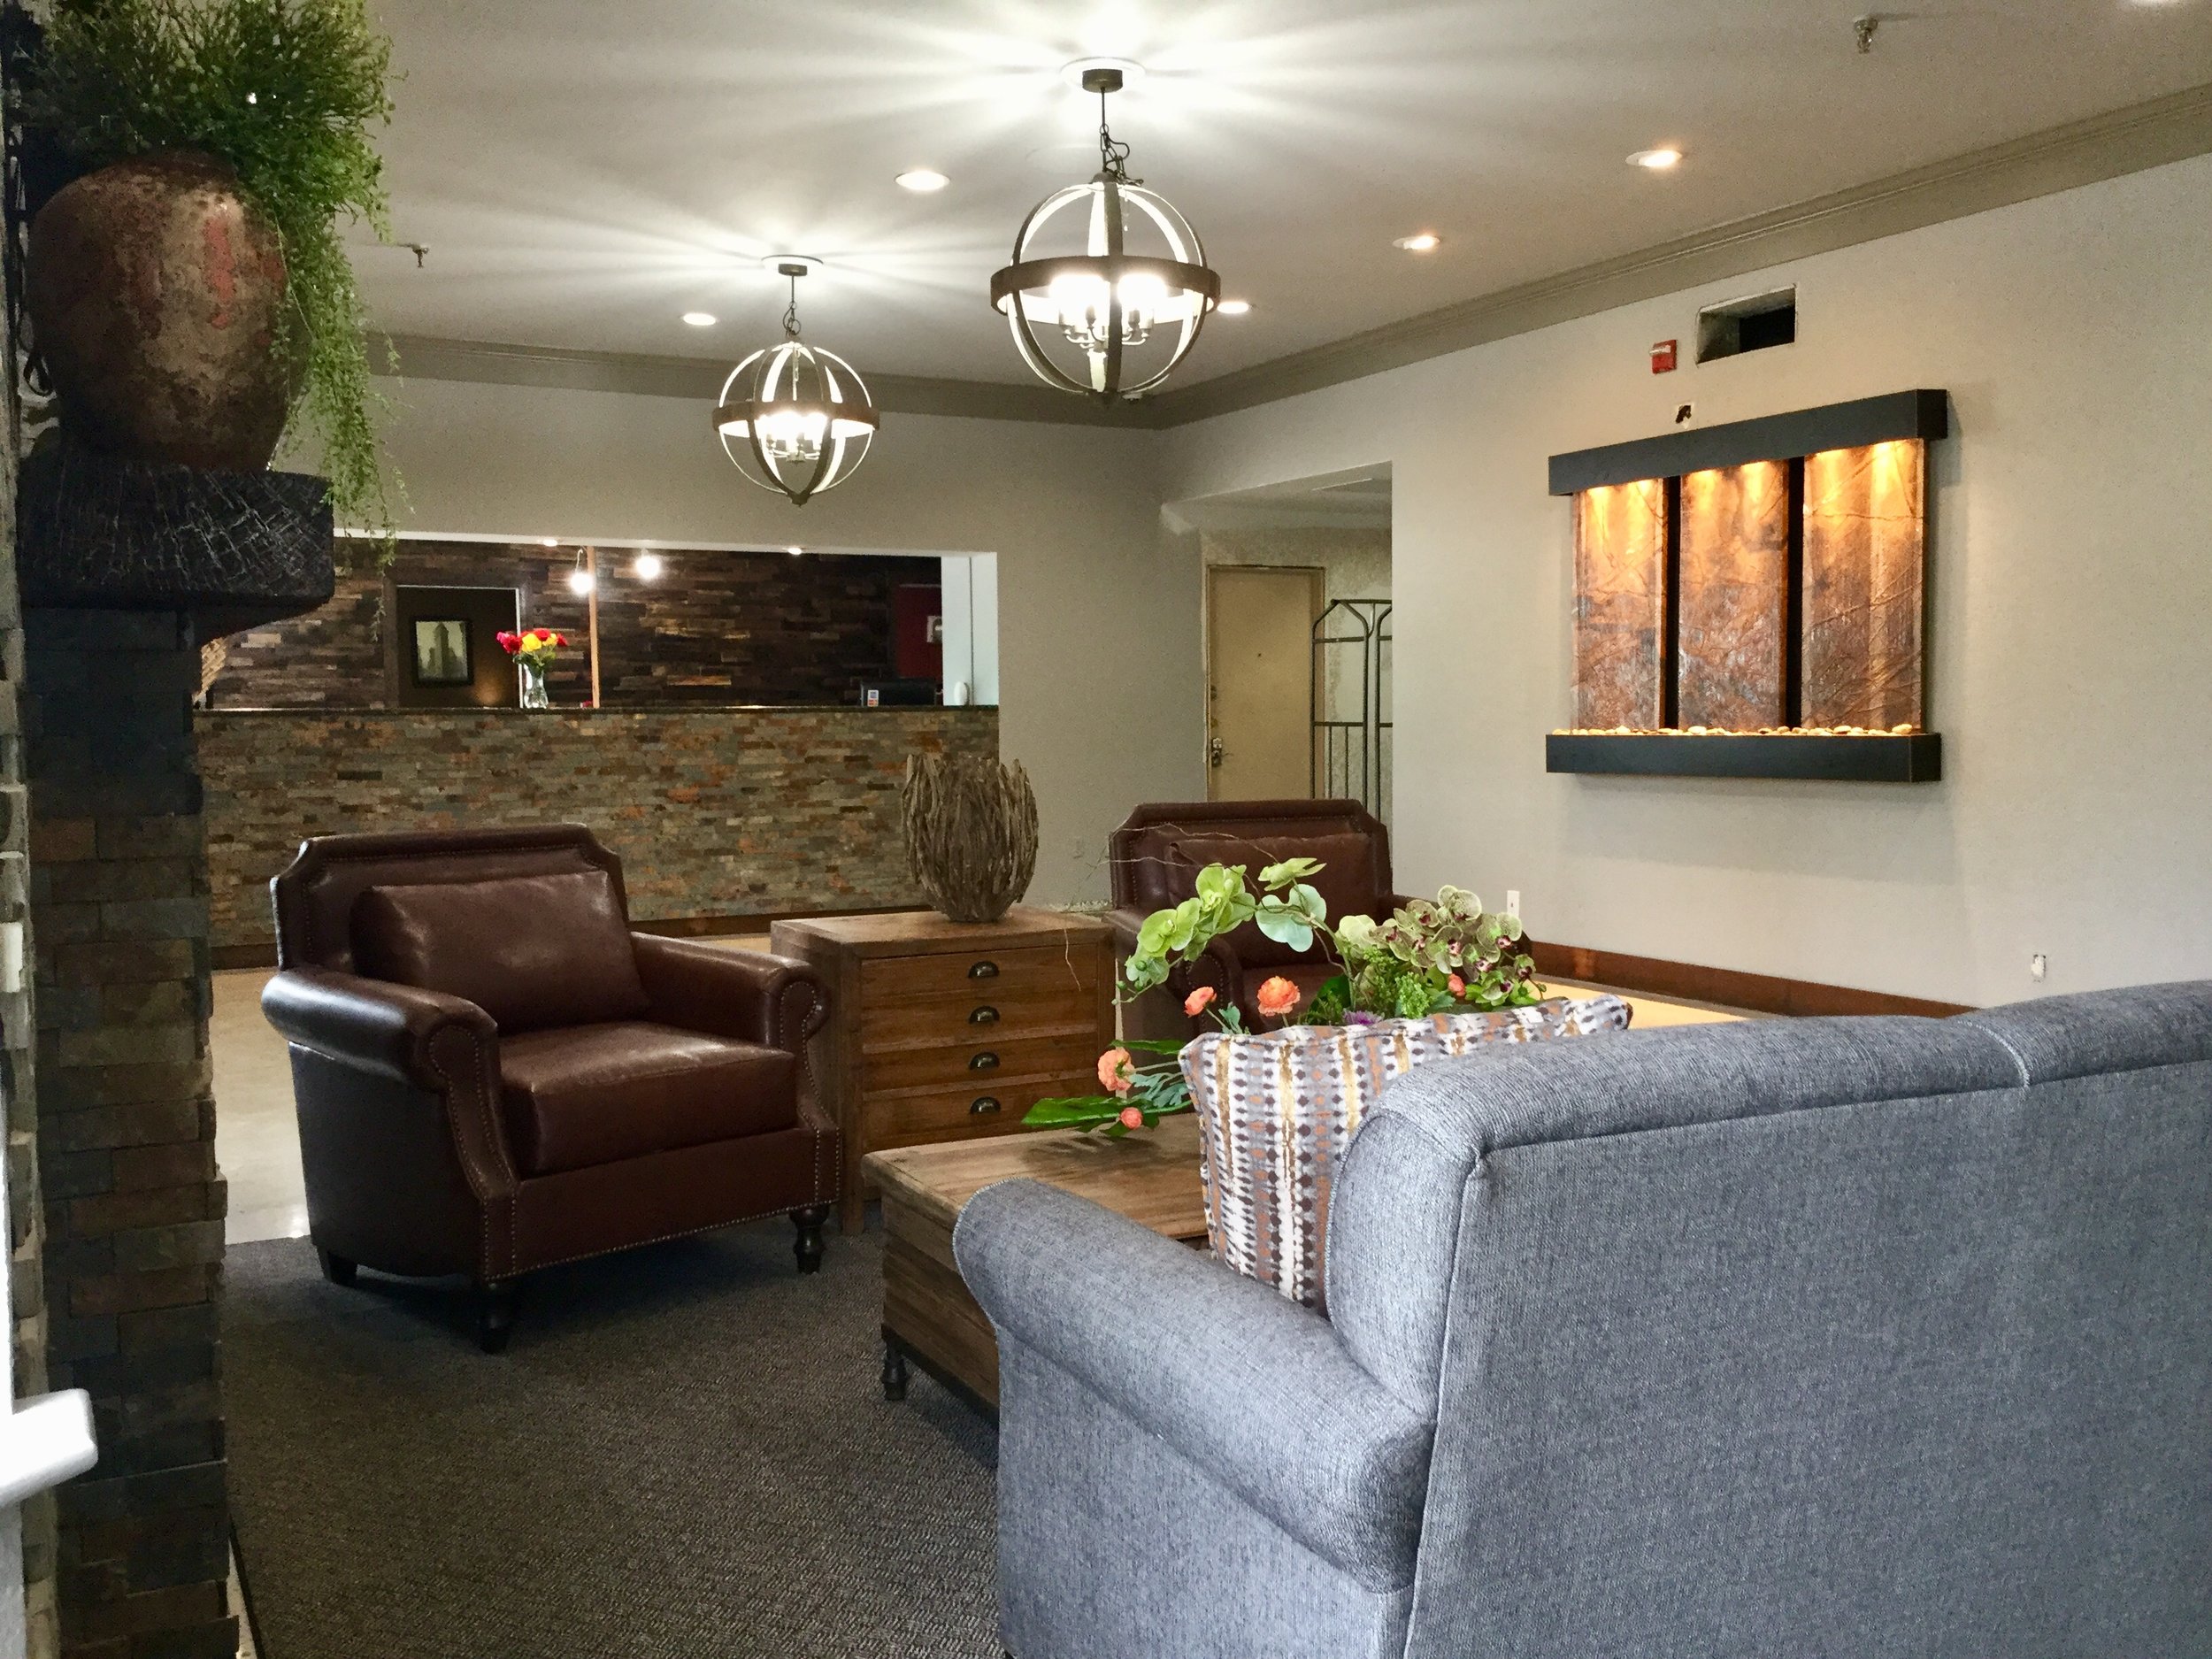 New lobby furniture with waterfall 2018.jpg